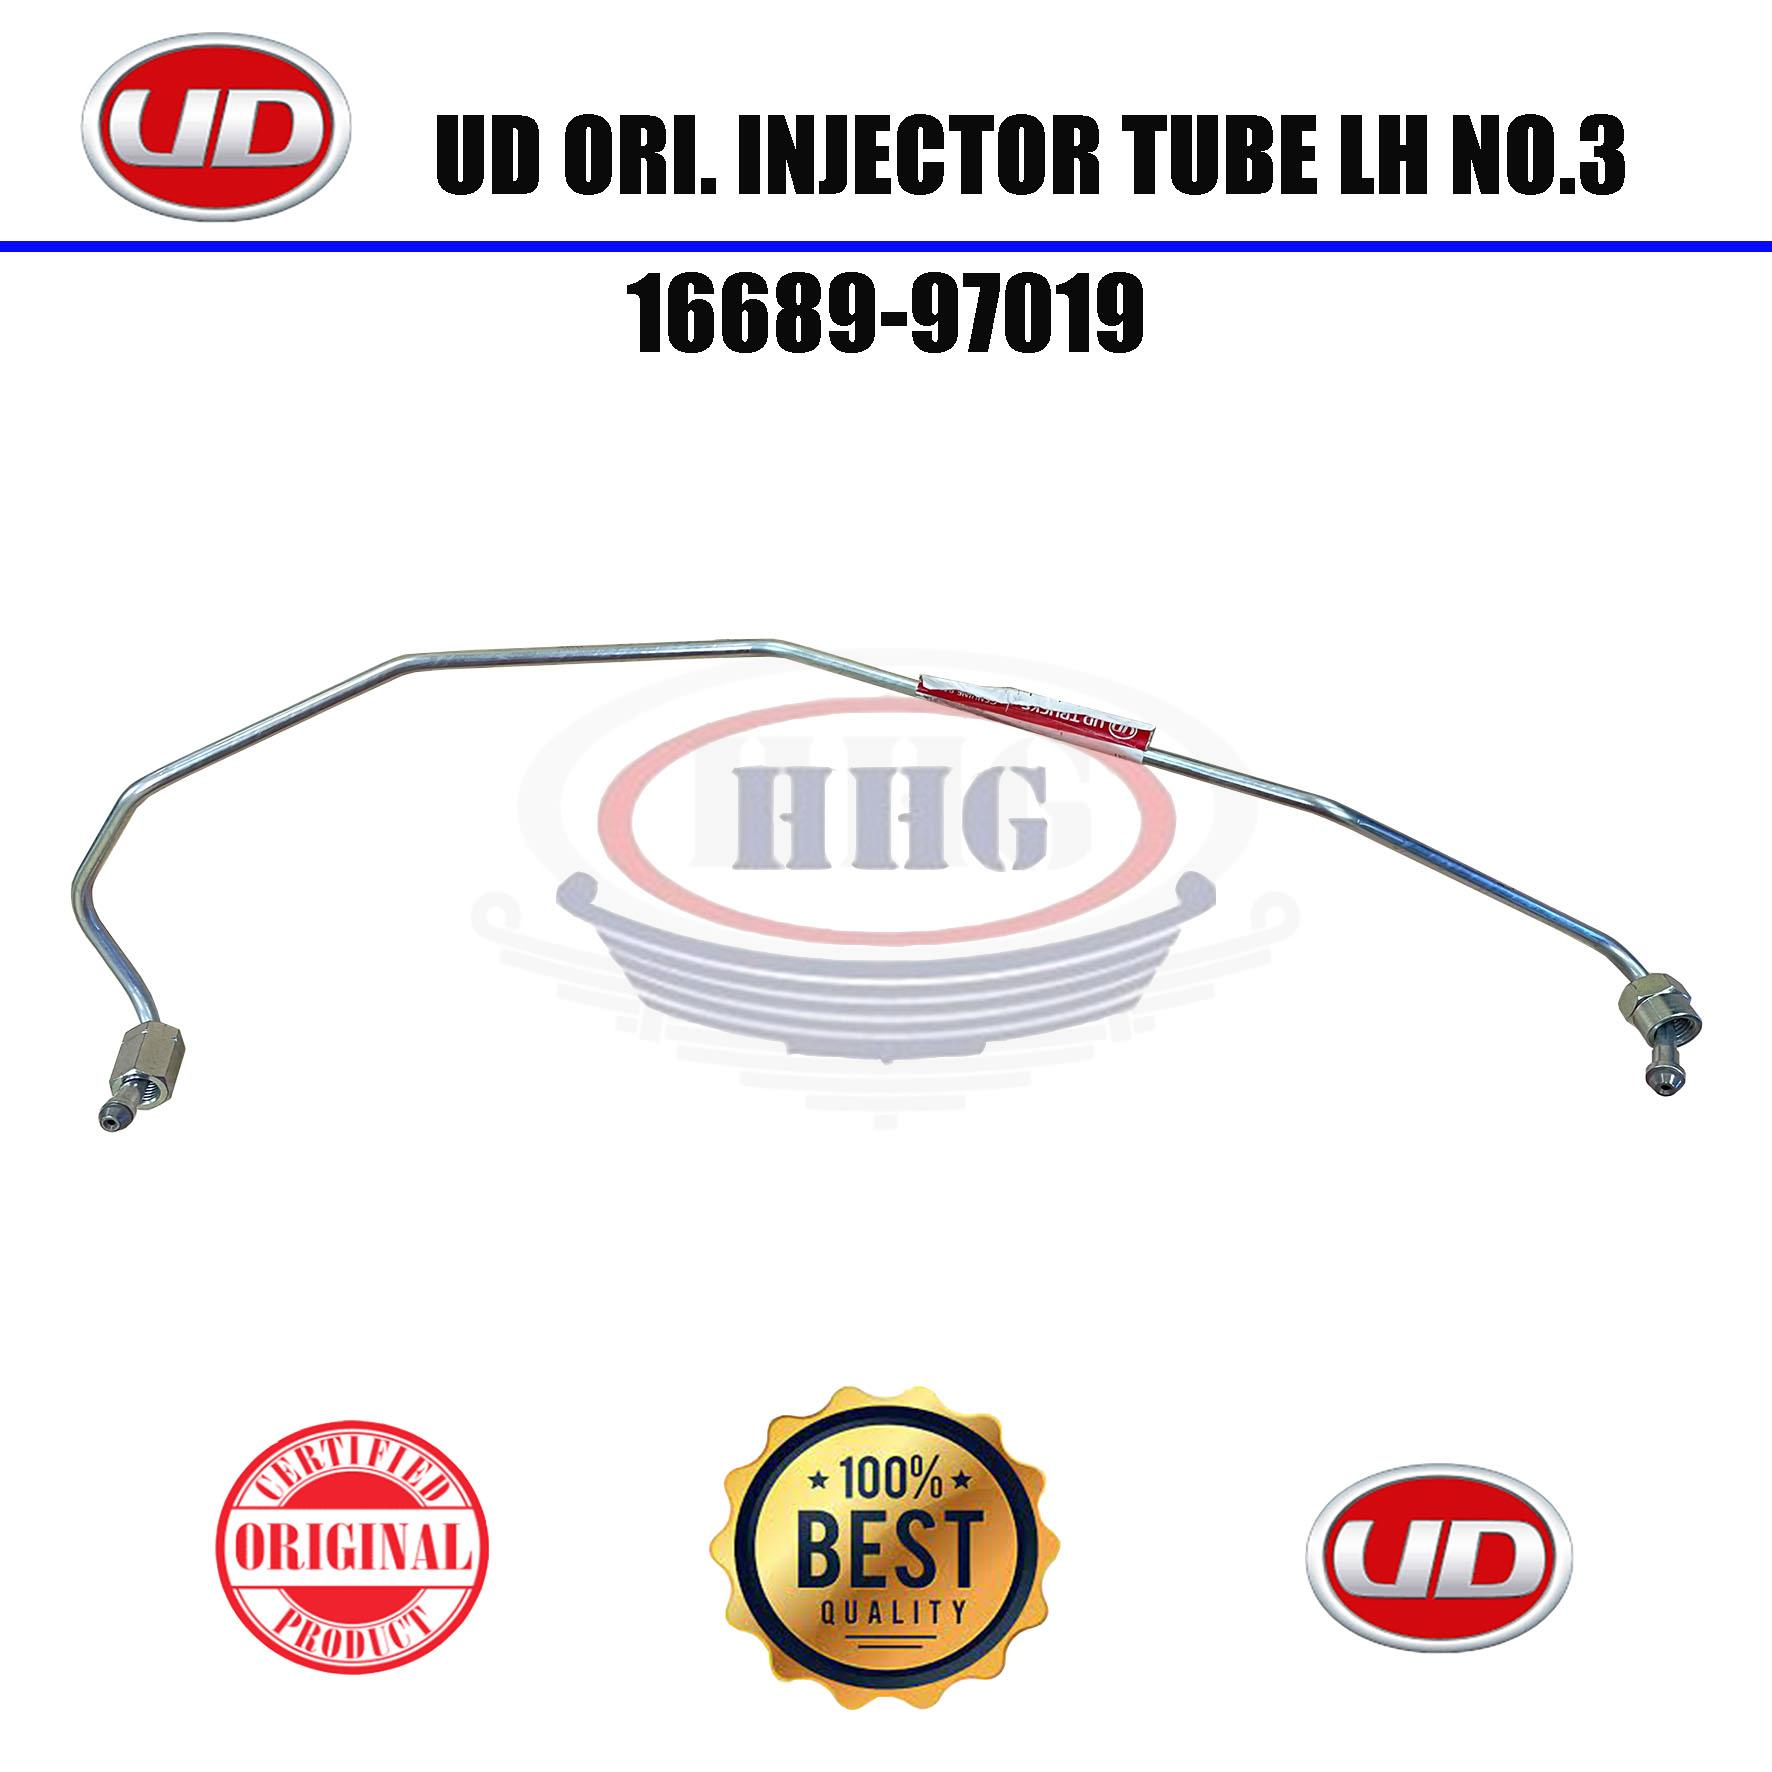 UD Original RF8 Injector Tube LH No.3 (16689-97019)